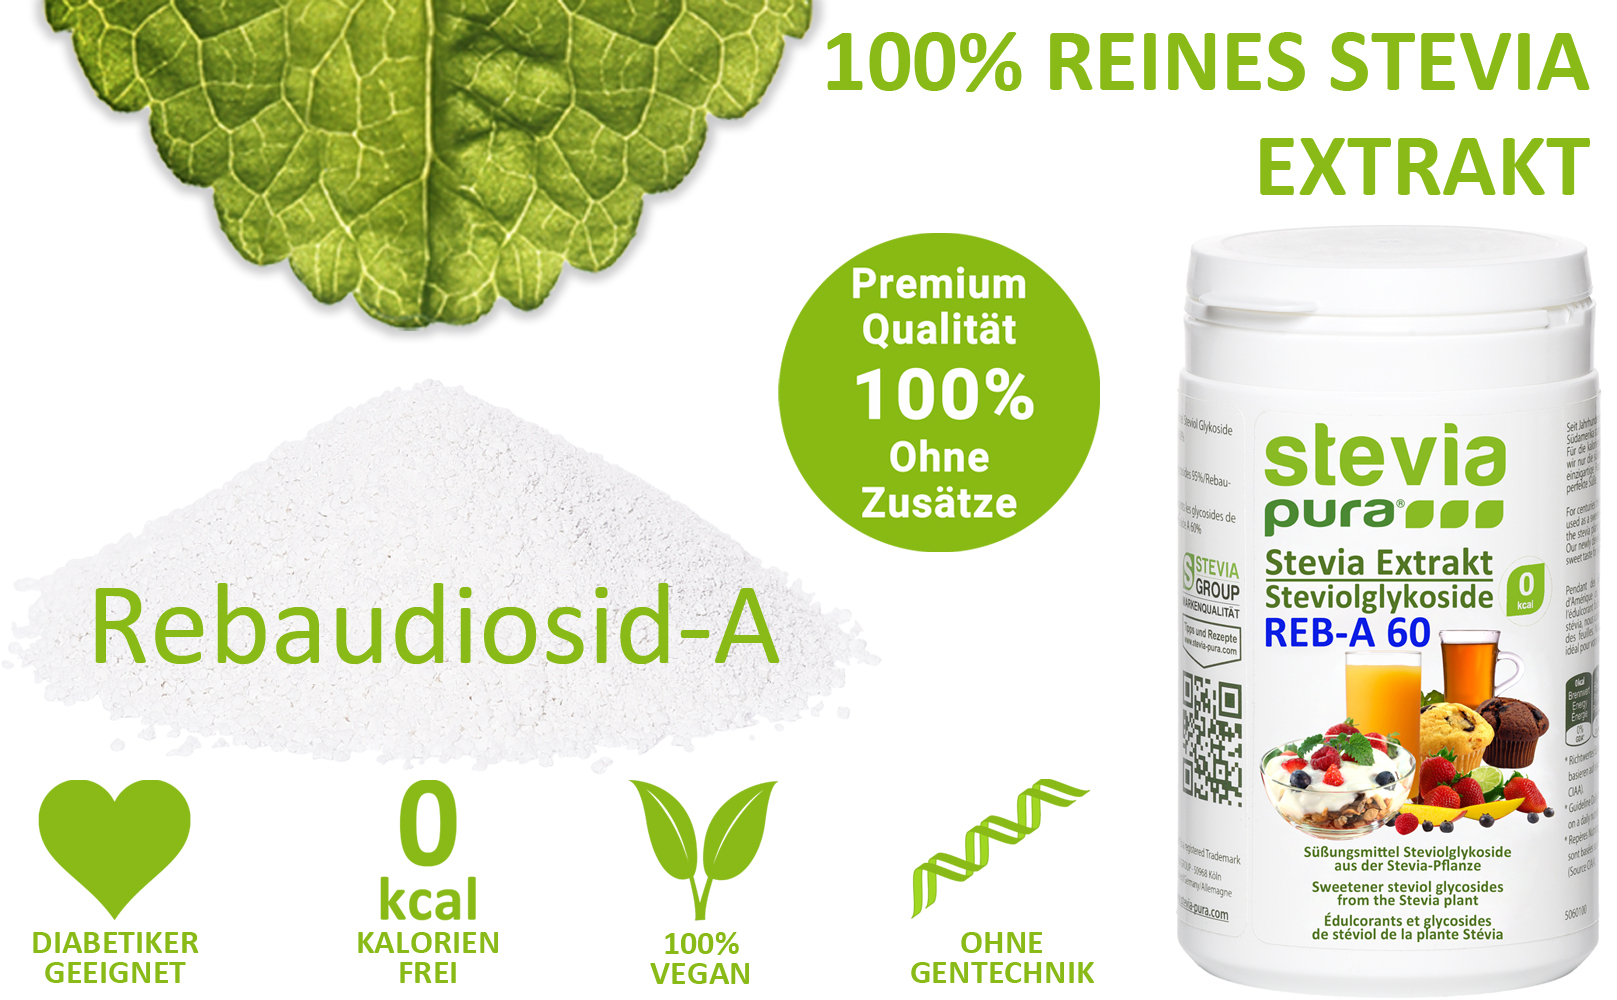 Reines Stevia Extrakt Pulver kaufen Rebaudiosid-A 60%